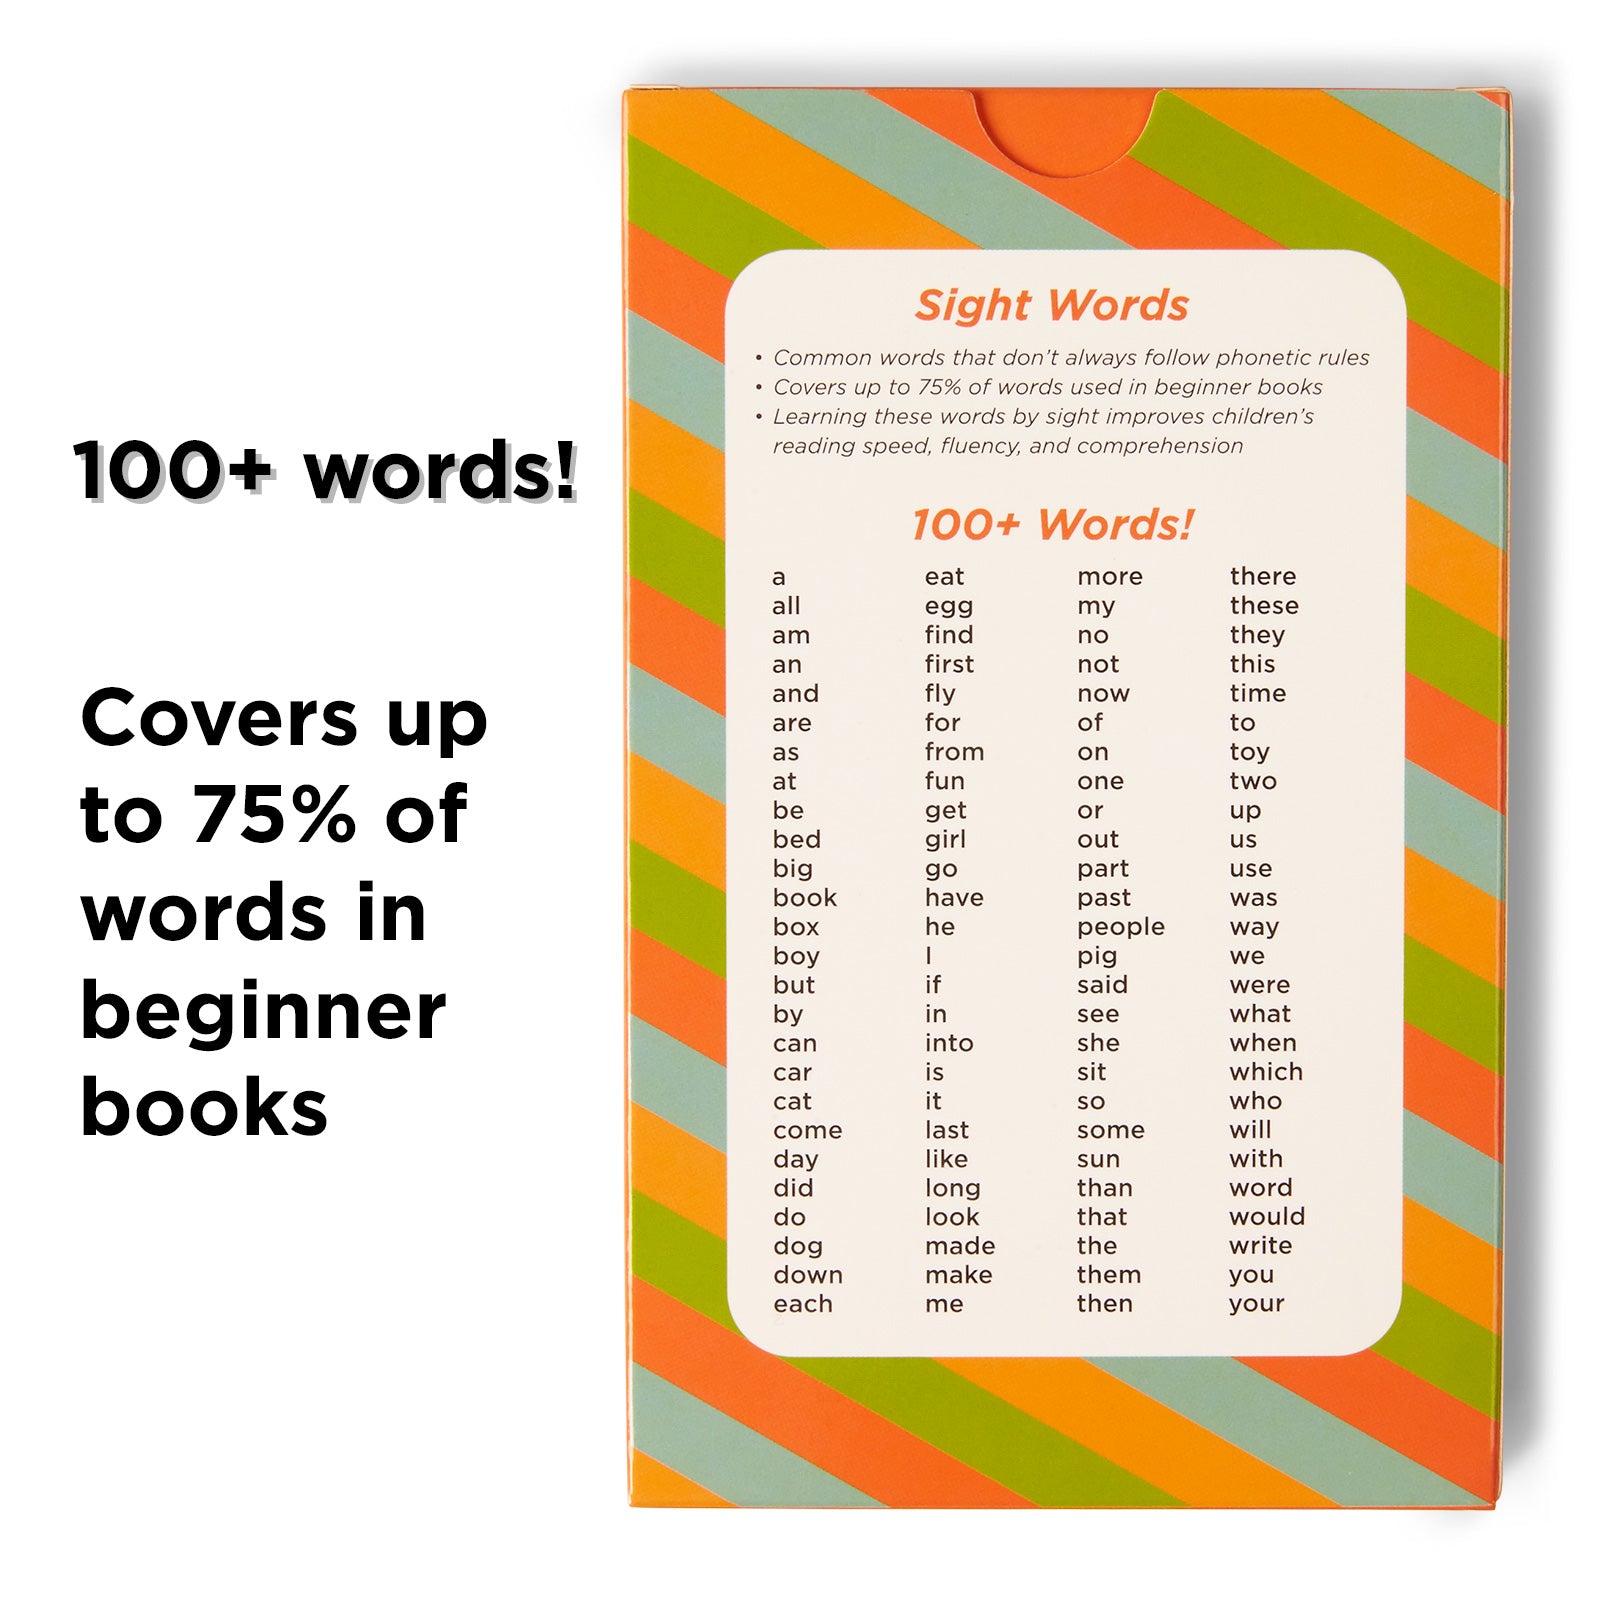 100+ Preschool Sight Words Flash Cards (Pre-K) | Think Tank Scholar